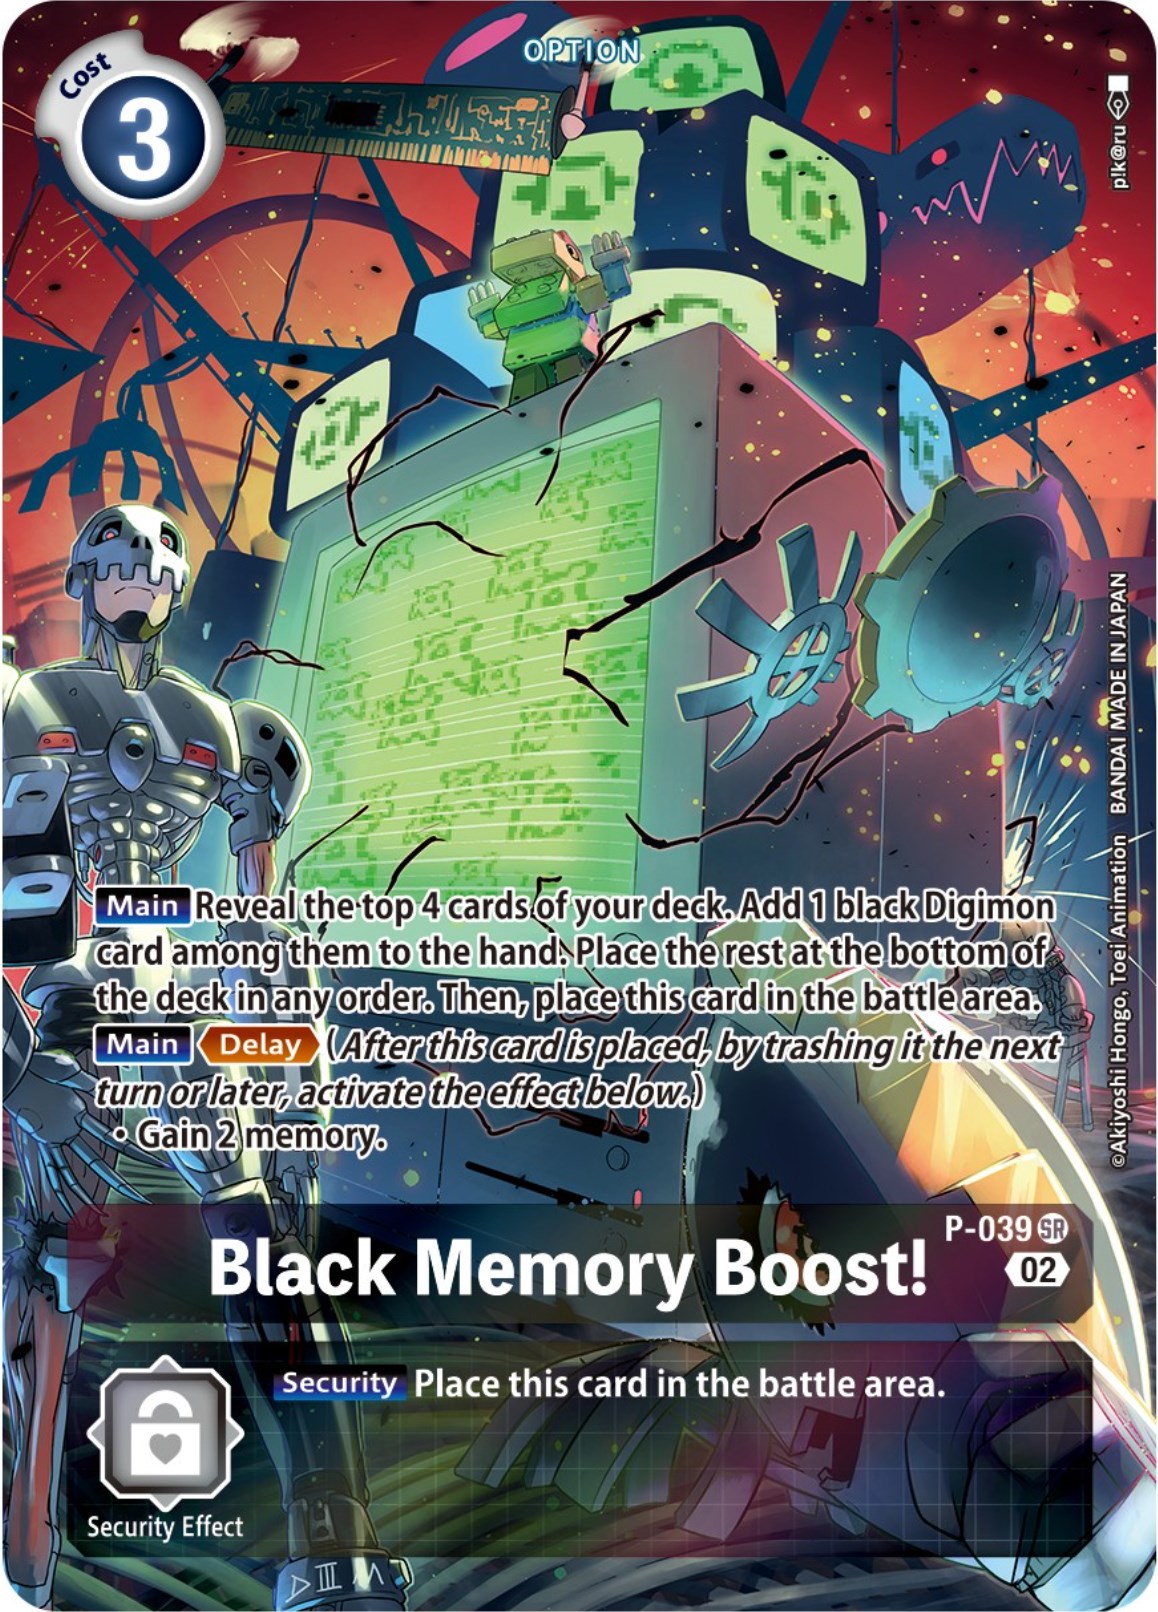 Black Memory Boost! - P-039 (Digimon Adventure Box 2) [P-039] [Digimon Promotion Cards] Foil